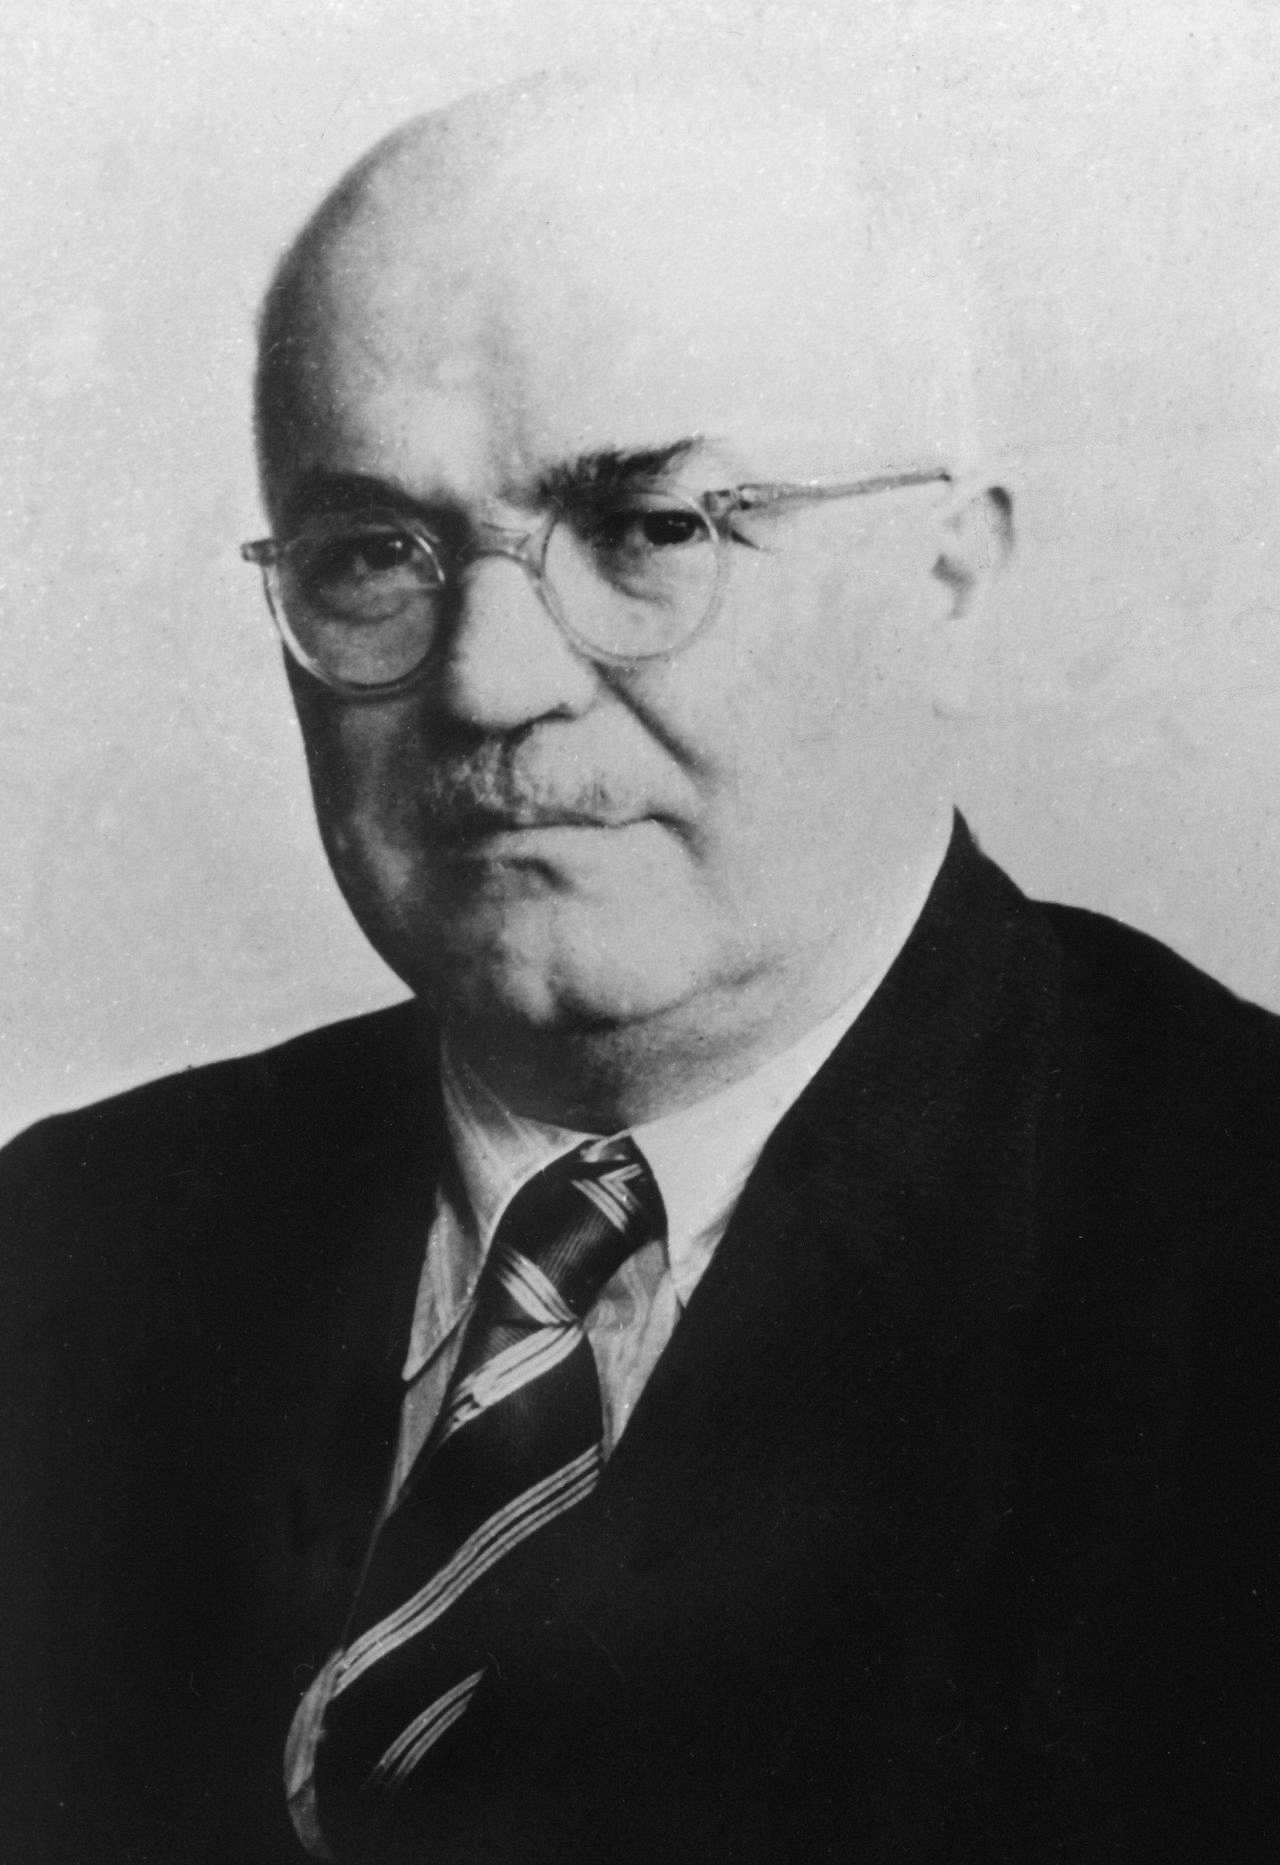 Porträtfotografie von Johannes Hoffmann, Ministerpräsident des Saarlands (1947-1955).